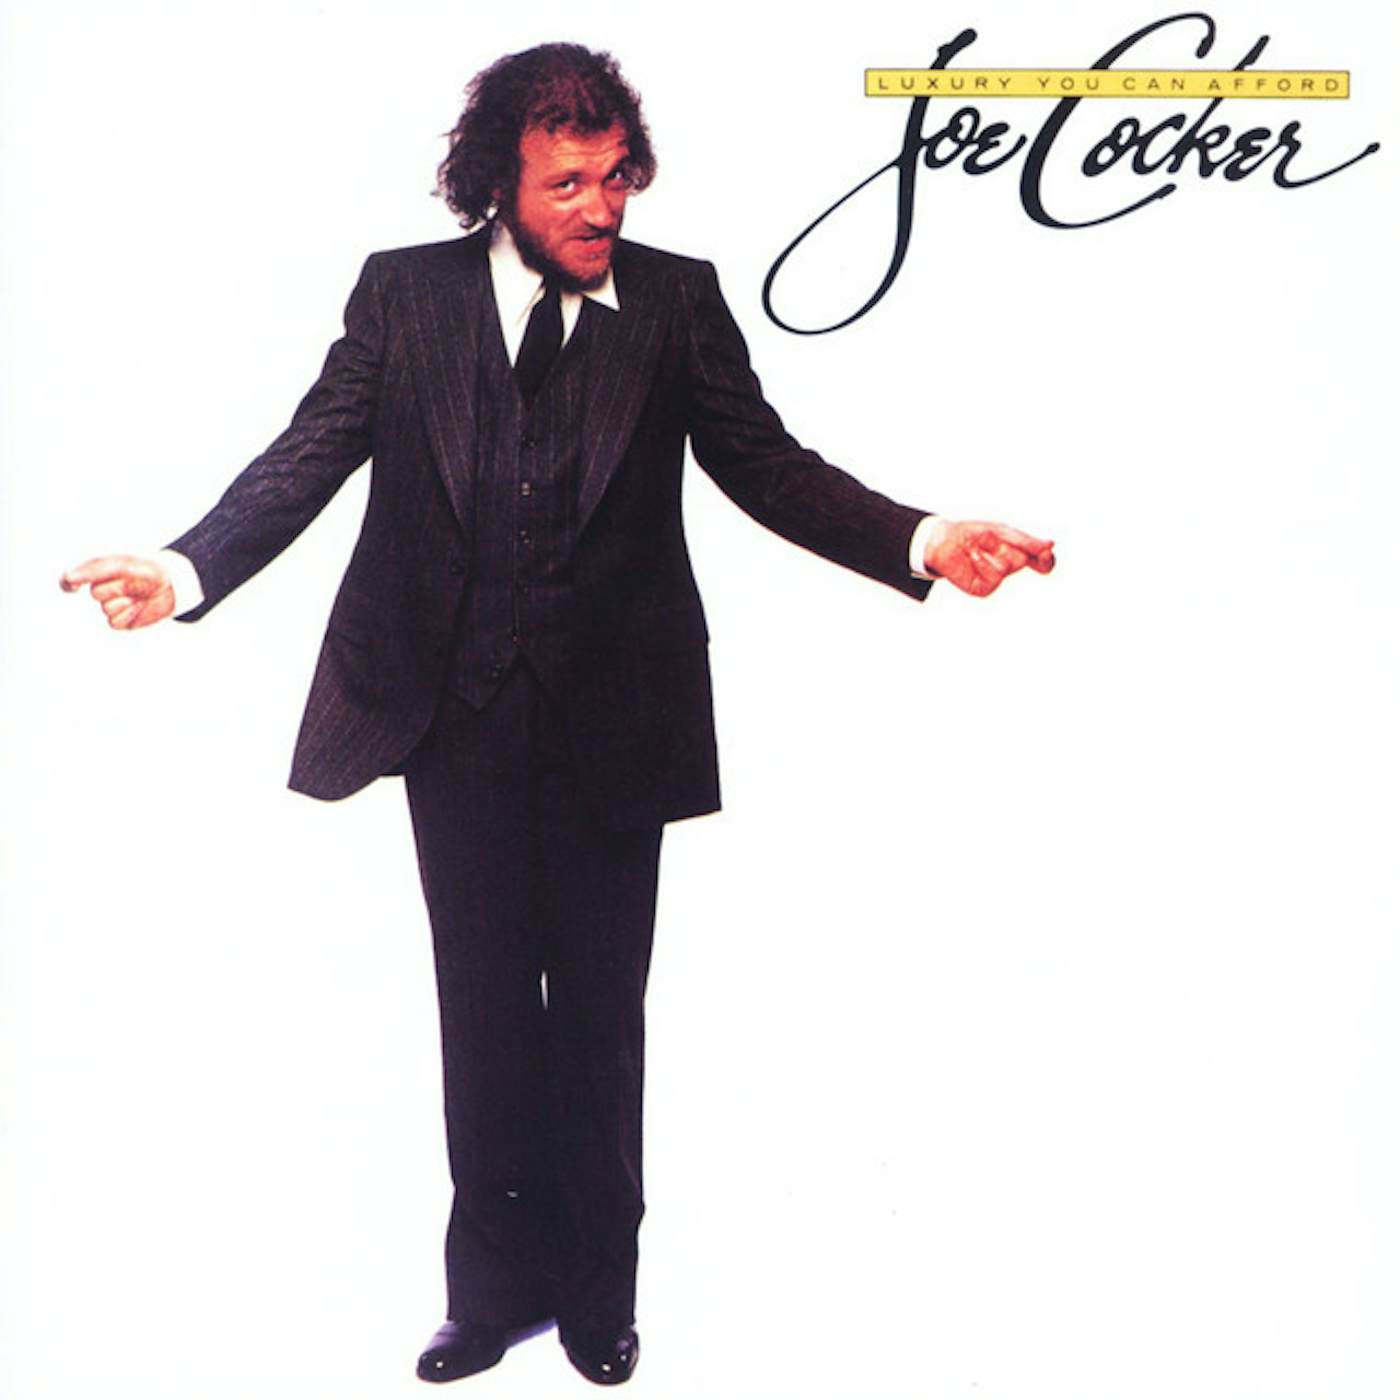 Joe Cocker Luxury You Can Afford CD